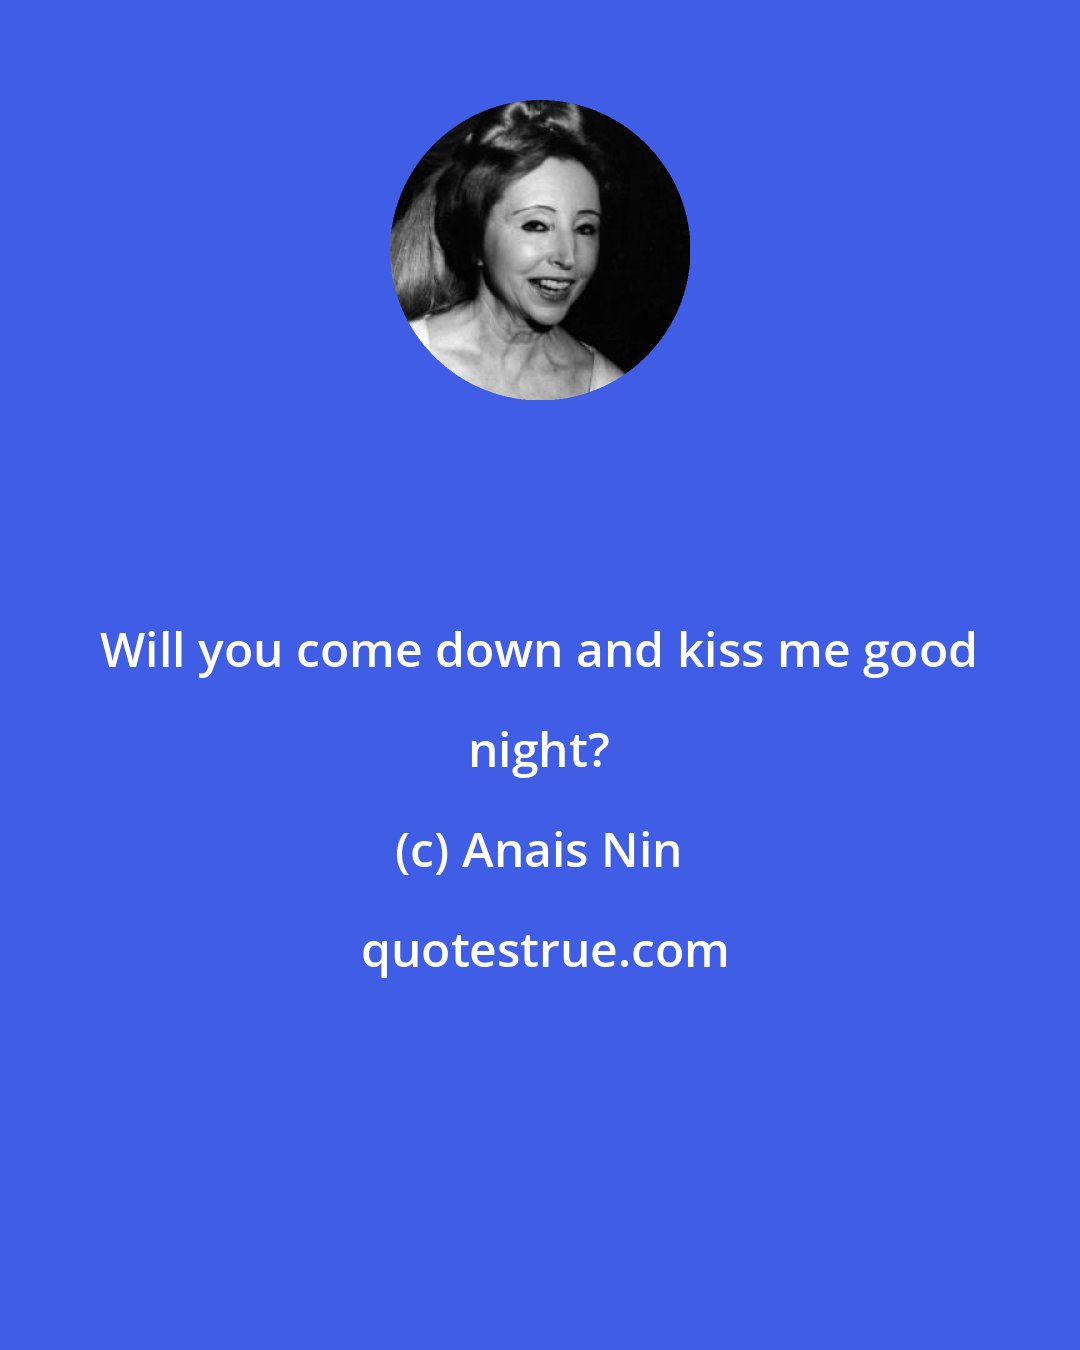 Anais Nin: Will you come down and kiss me good night?